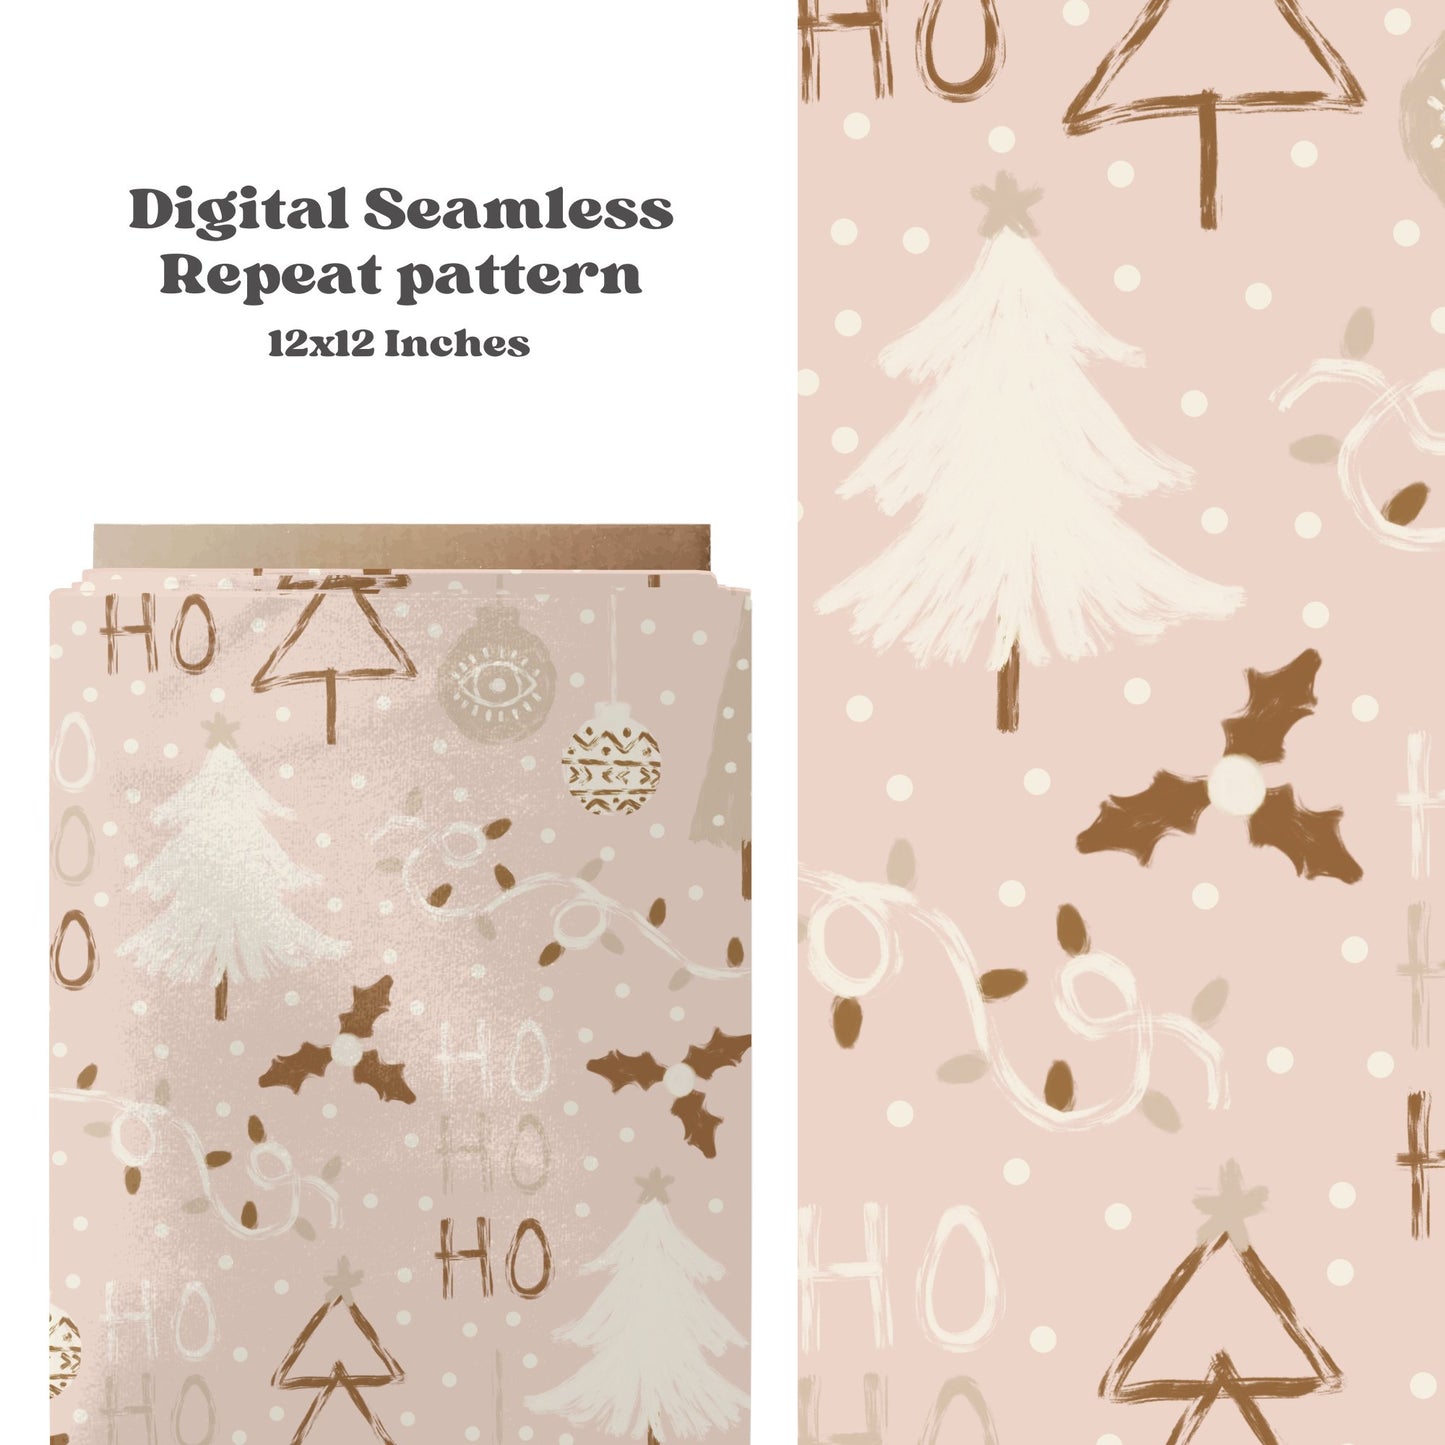 Boho Christmas Pattern Design - SkyyDesignsCo | Seamless Pattern Designs